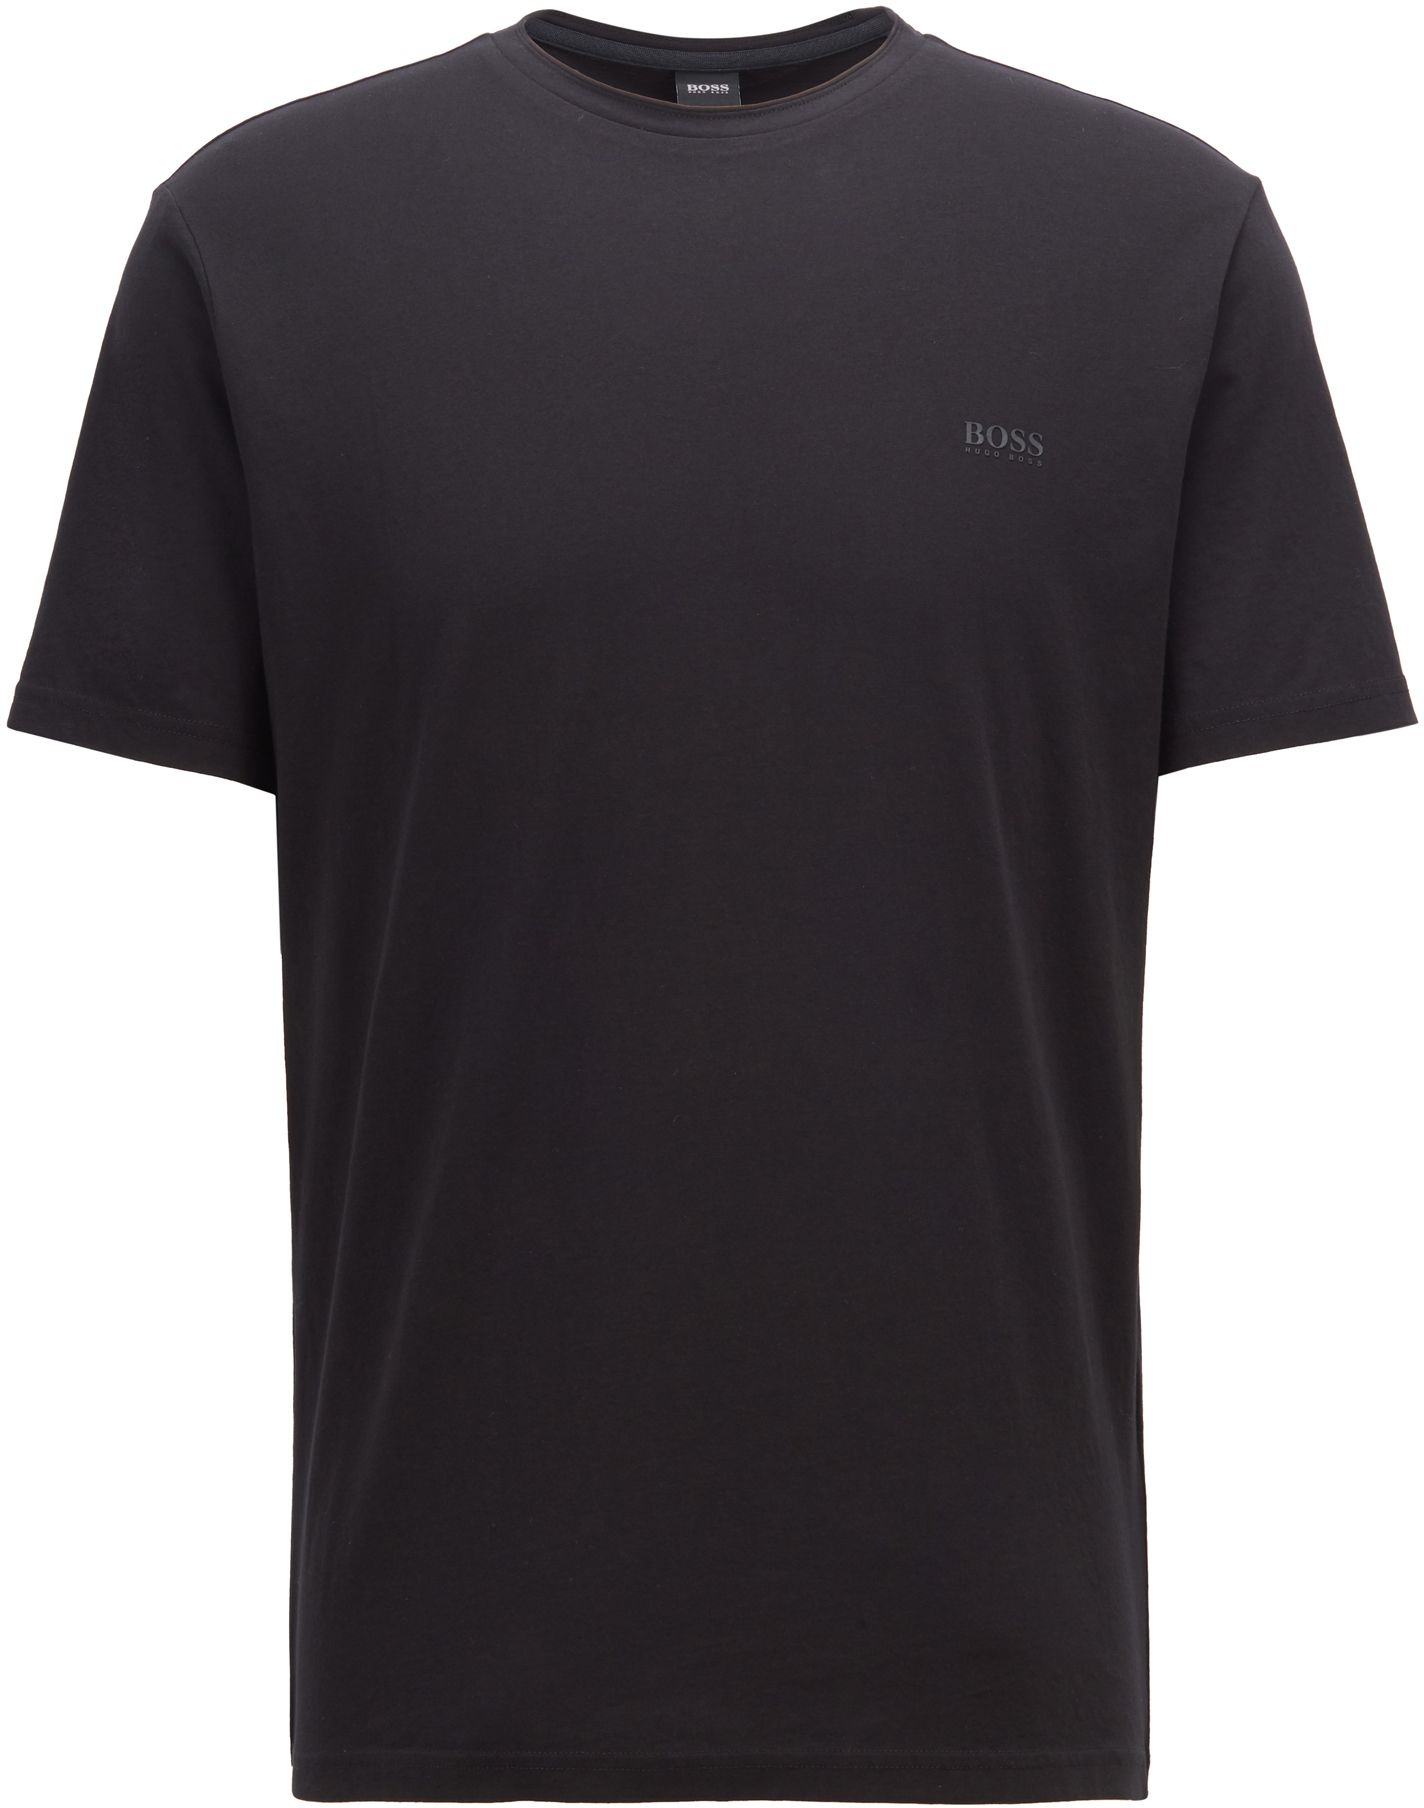 Hugo Boss T Shirt Trust Black size M